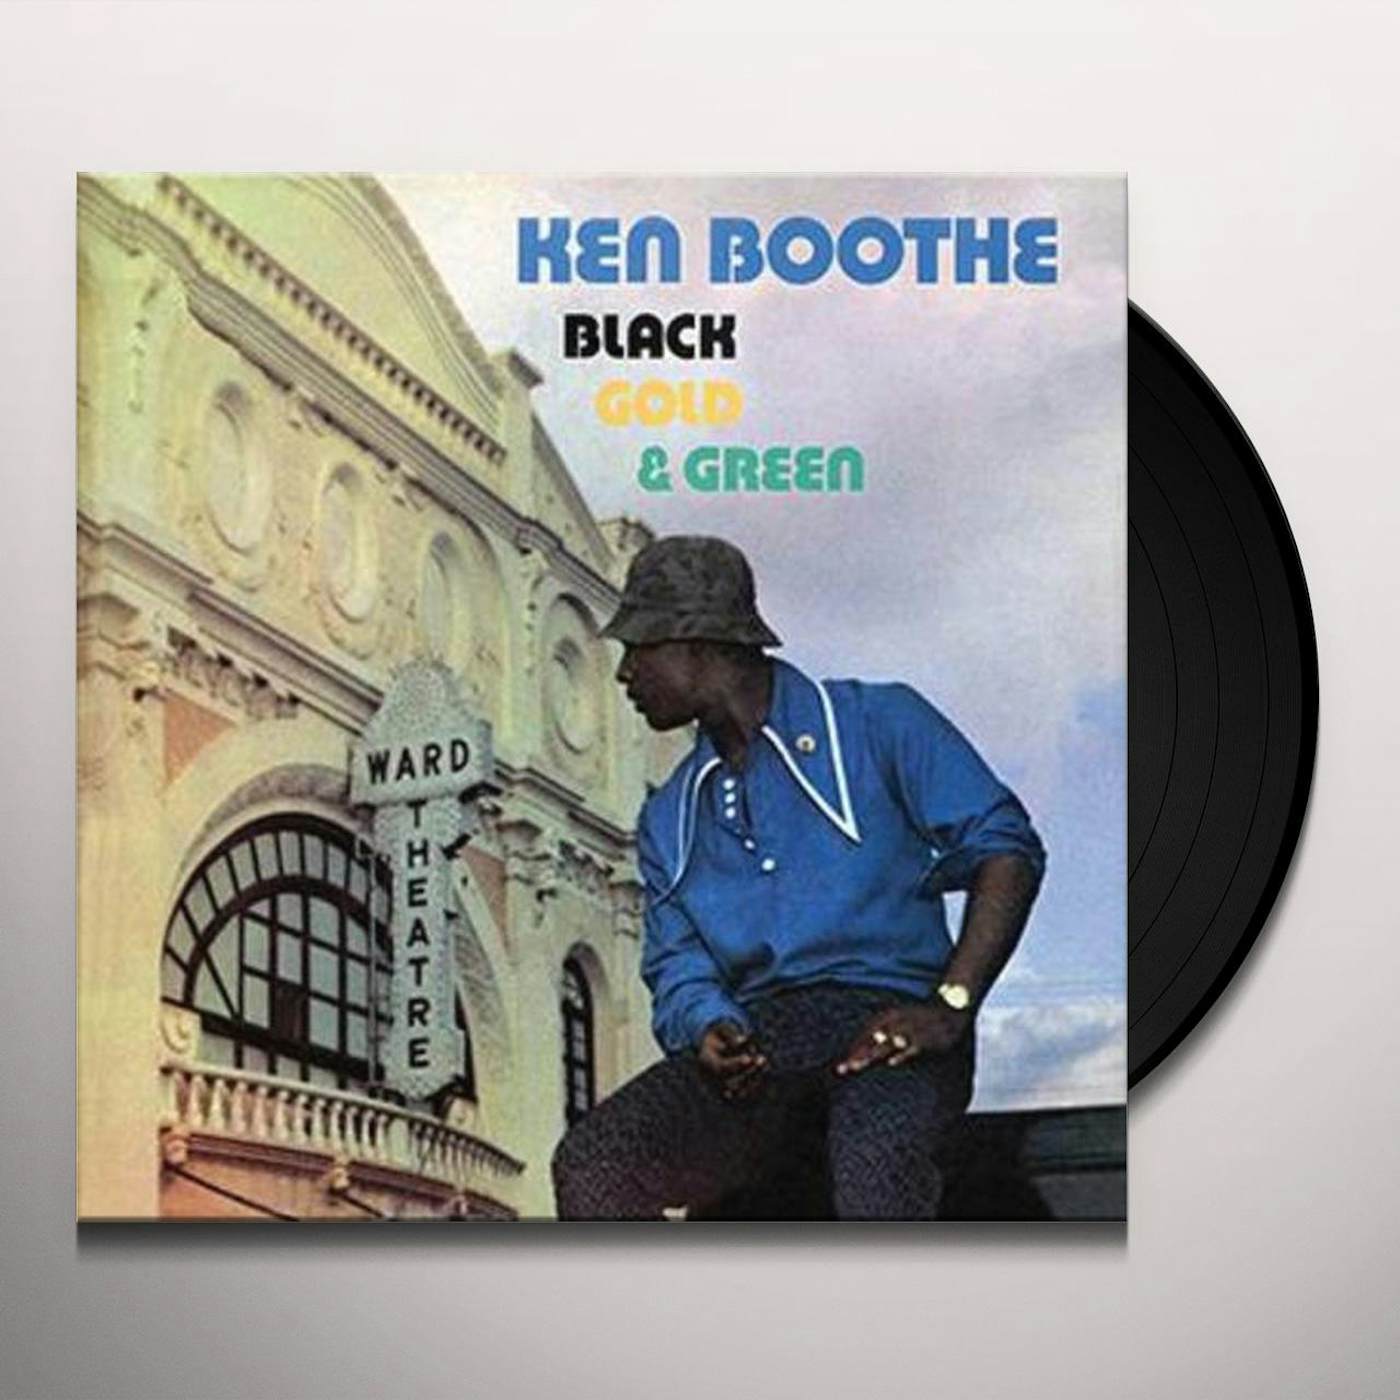 Ken Boothe BLACK, GOLD & GREEN Vinyl Record